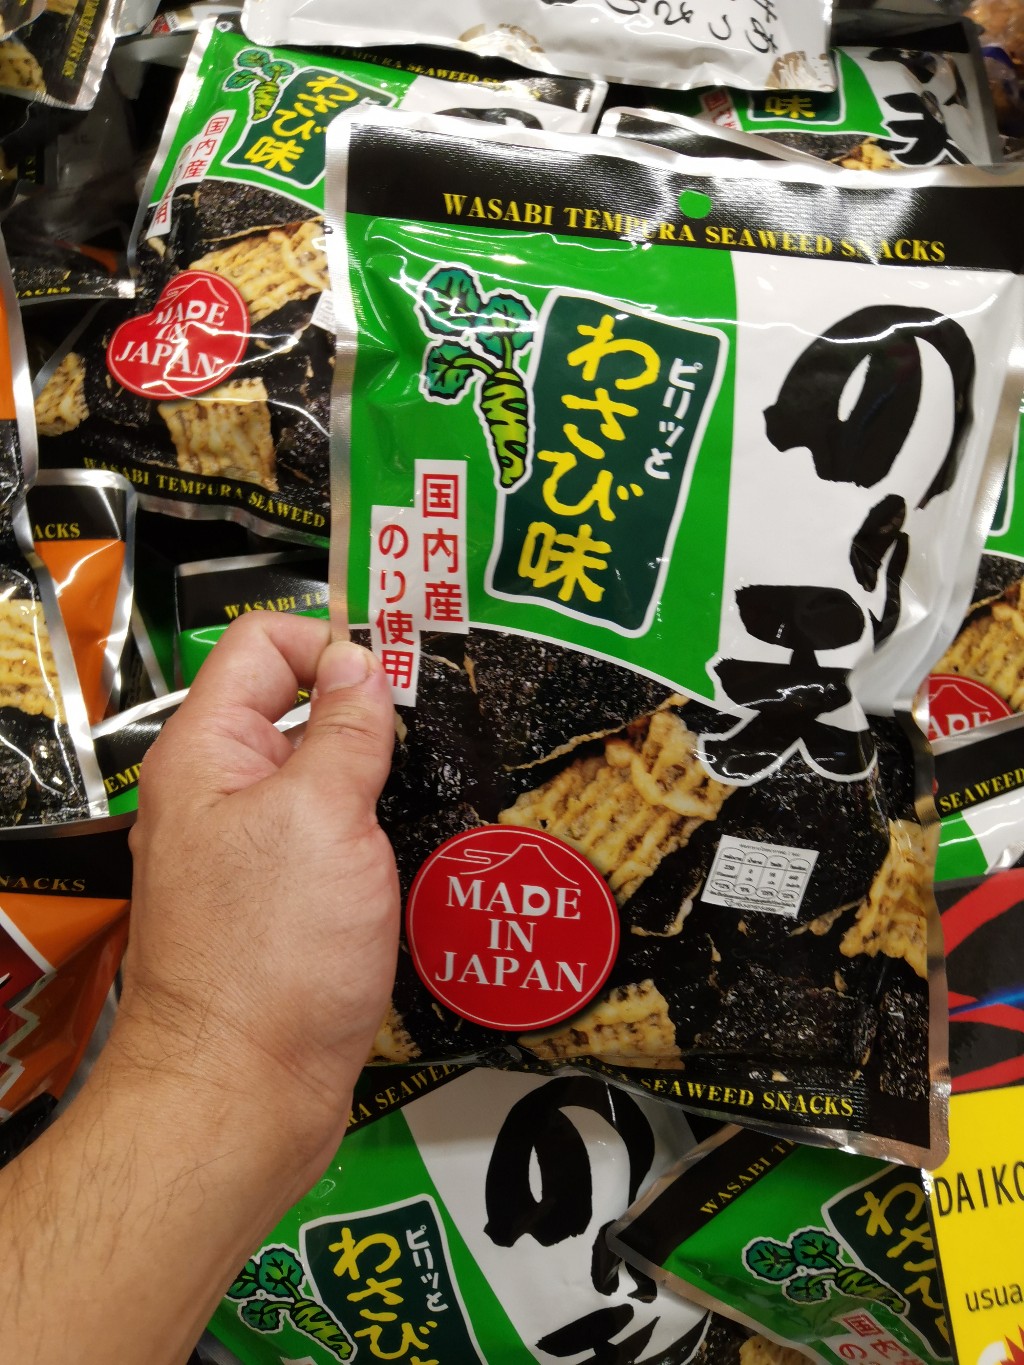 ecook ญี่ปุ่น ขนม สาหร่าย ปรุงรส วาซาบิ hisupa dk daiko foods noriten wasabi 40g